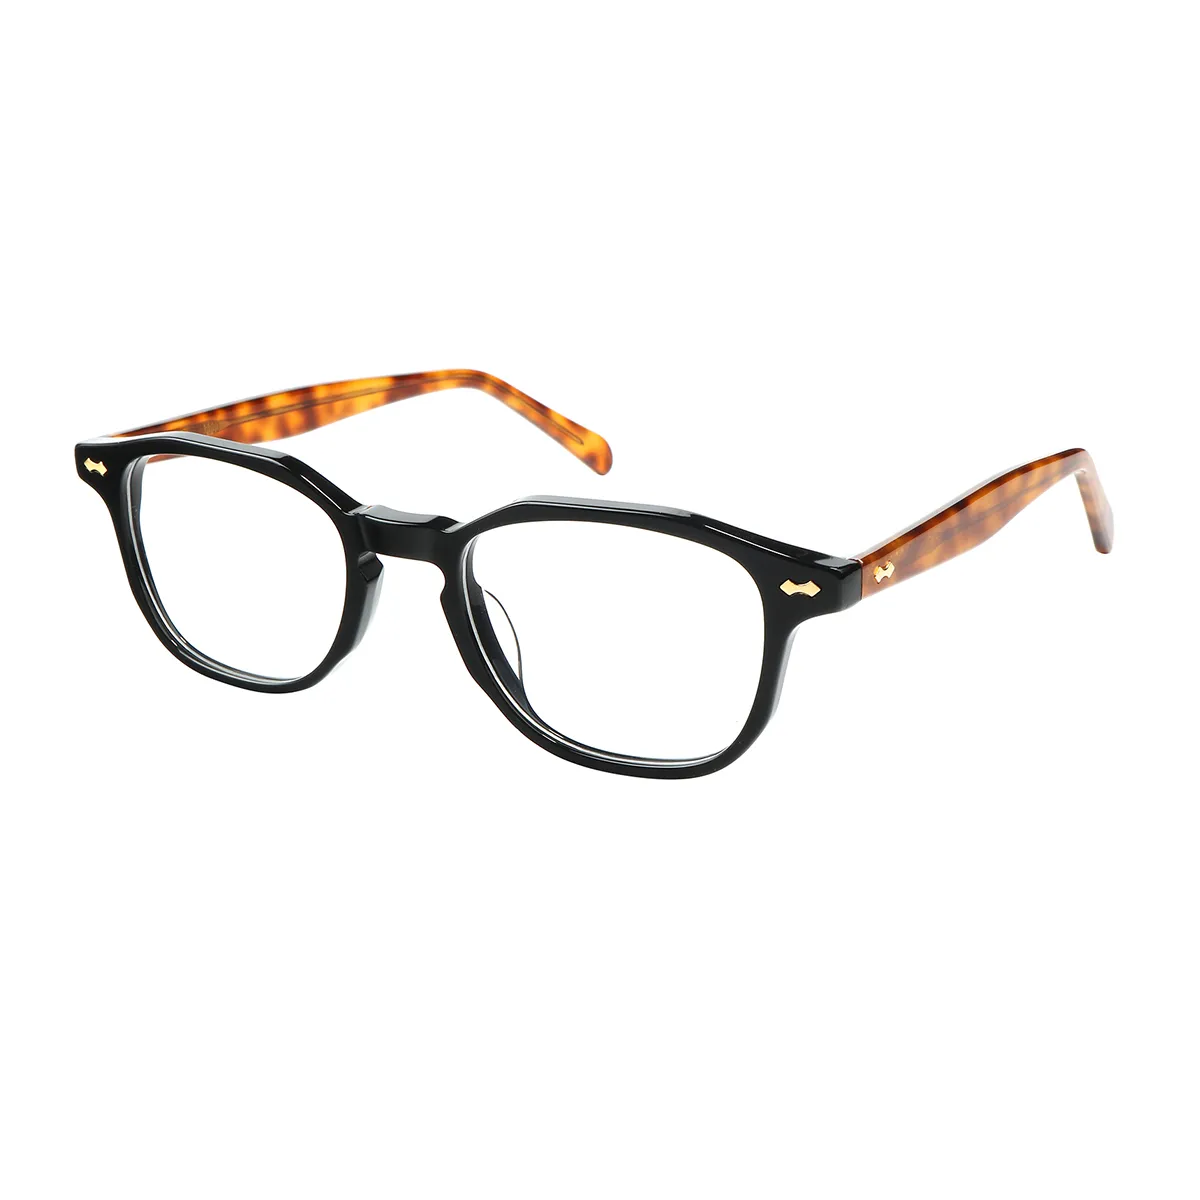 Allais - Square Black Glasses for Men & Women